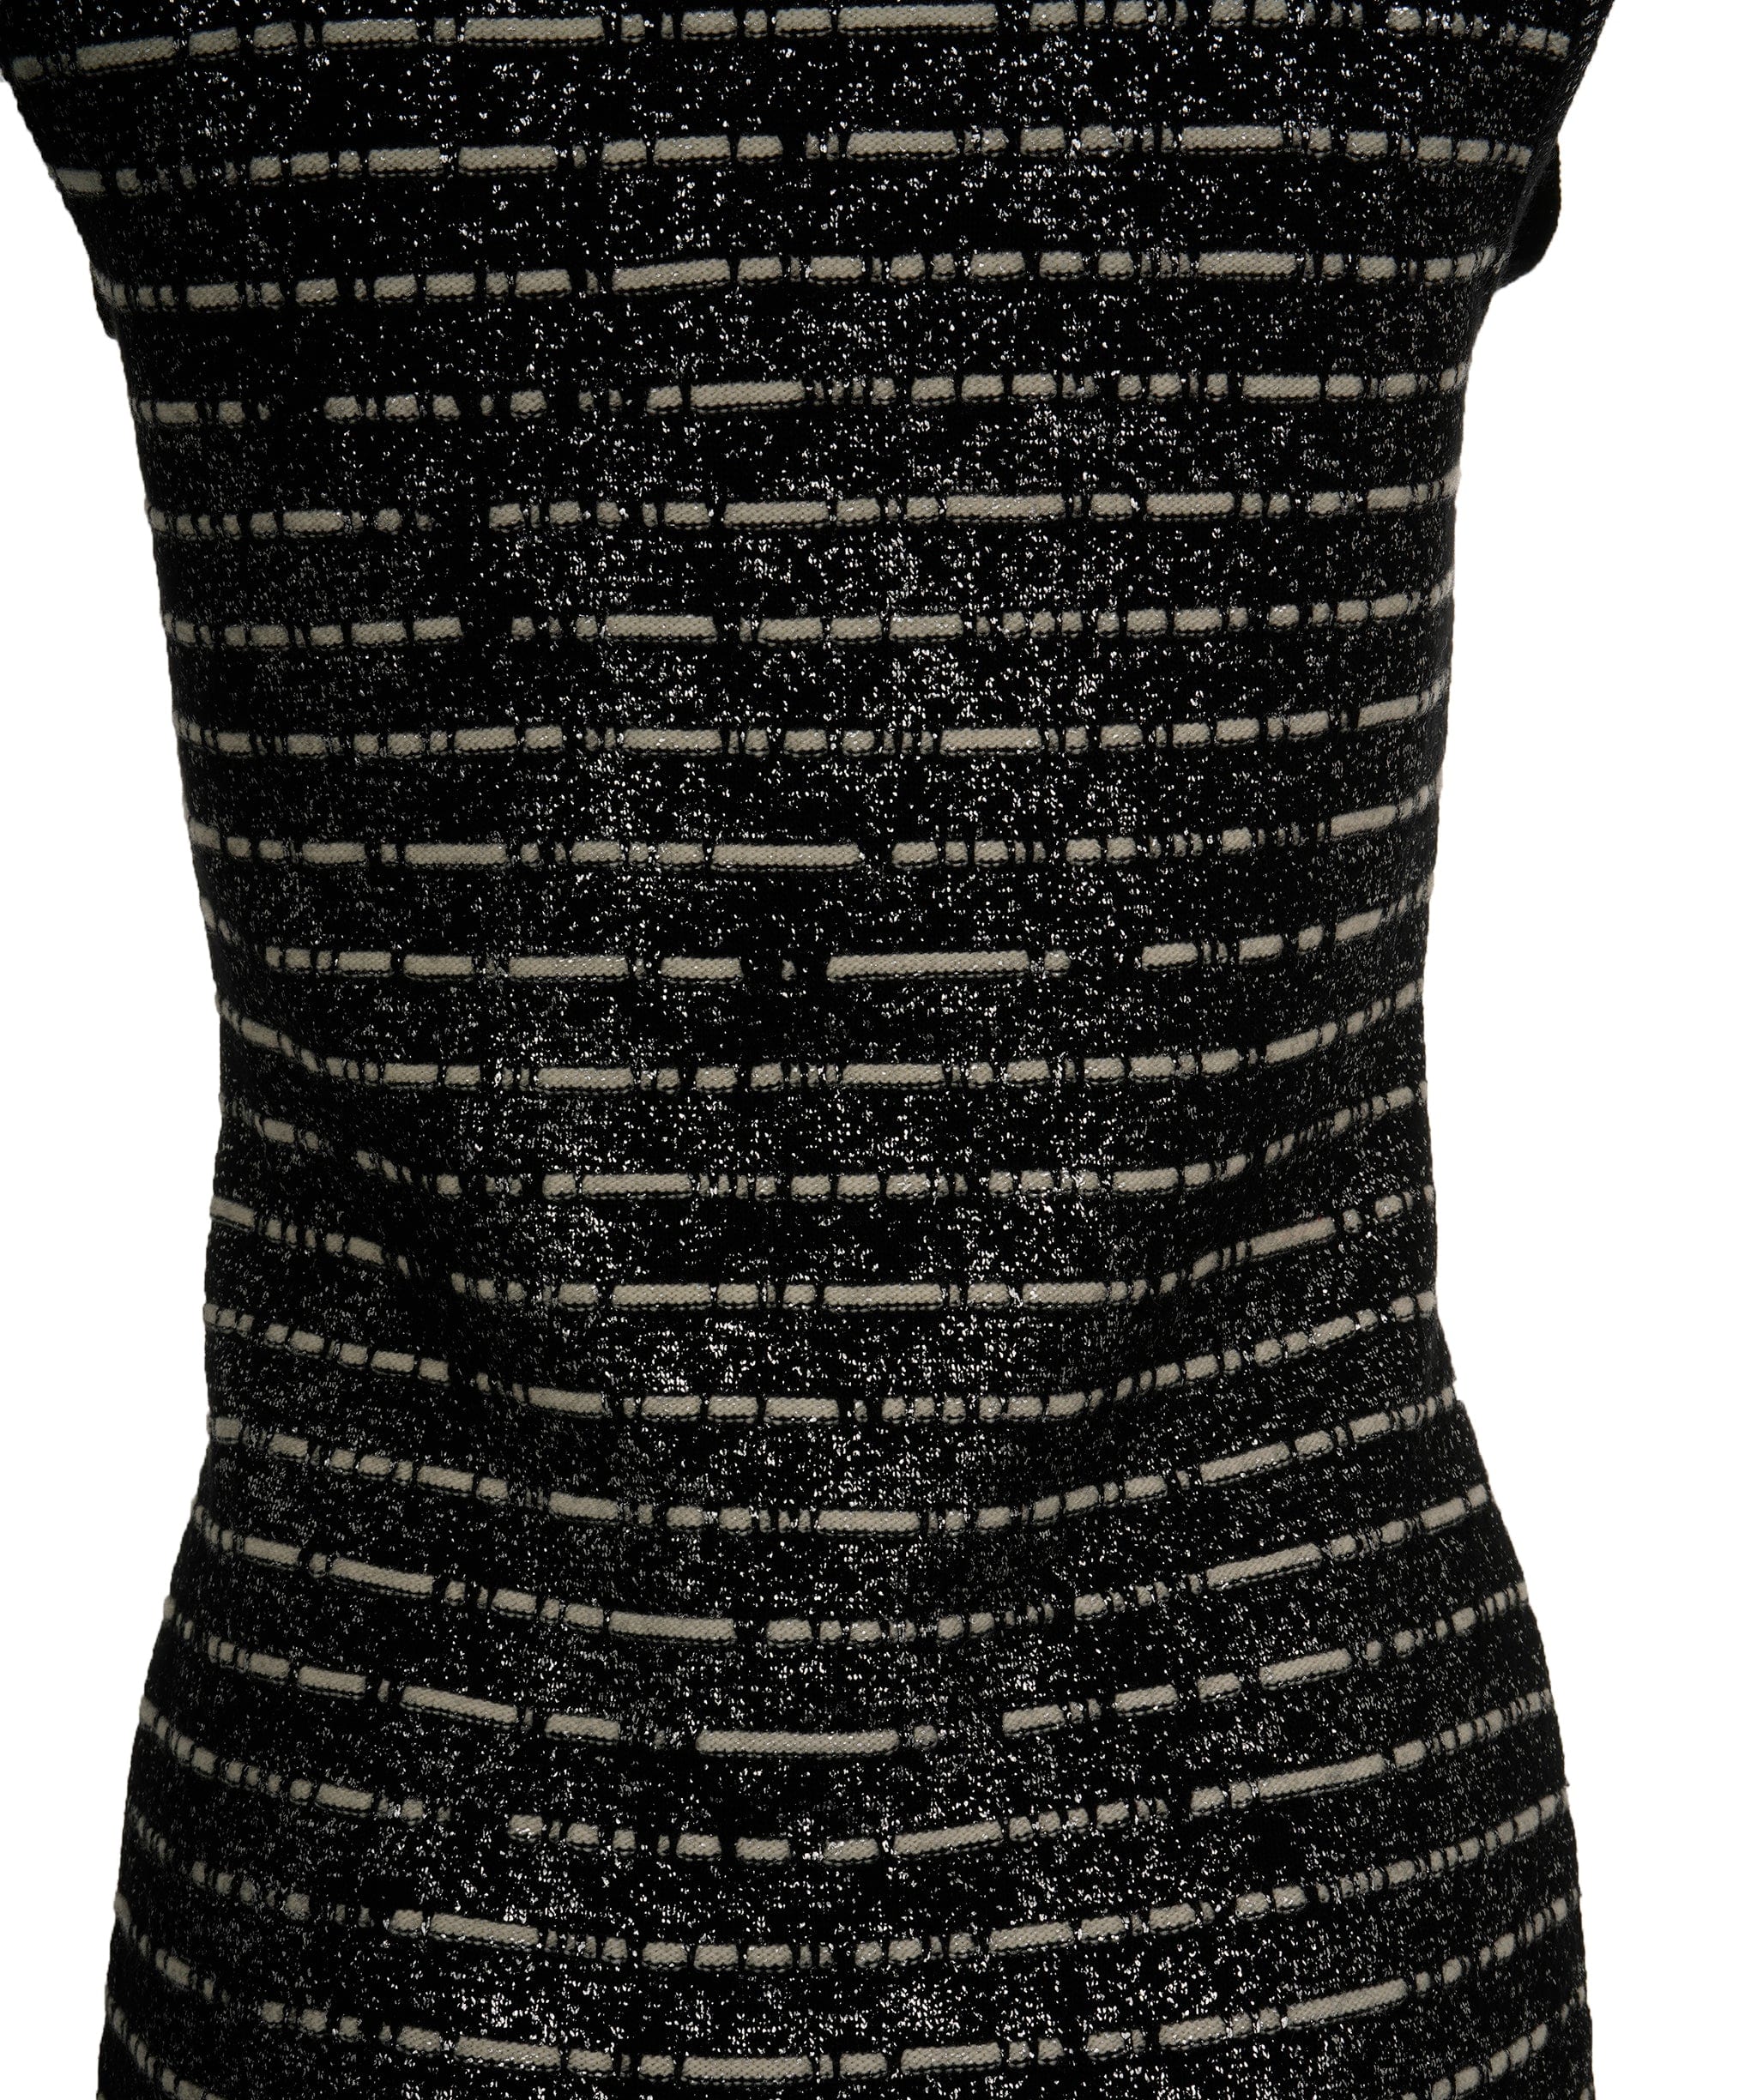 Chanel Robe Chanel knit rayure noir blanc FR36 P39229K02756 AVC1630